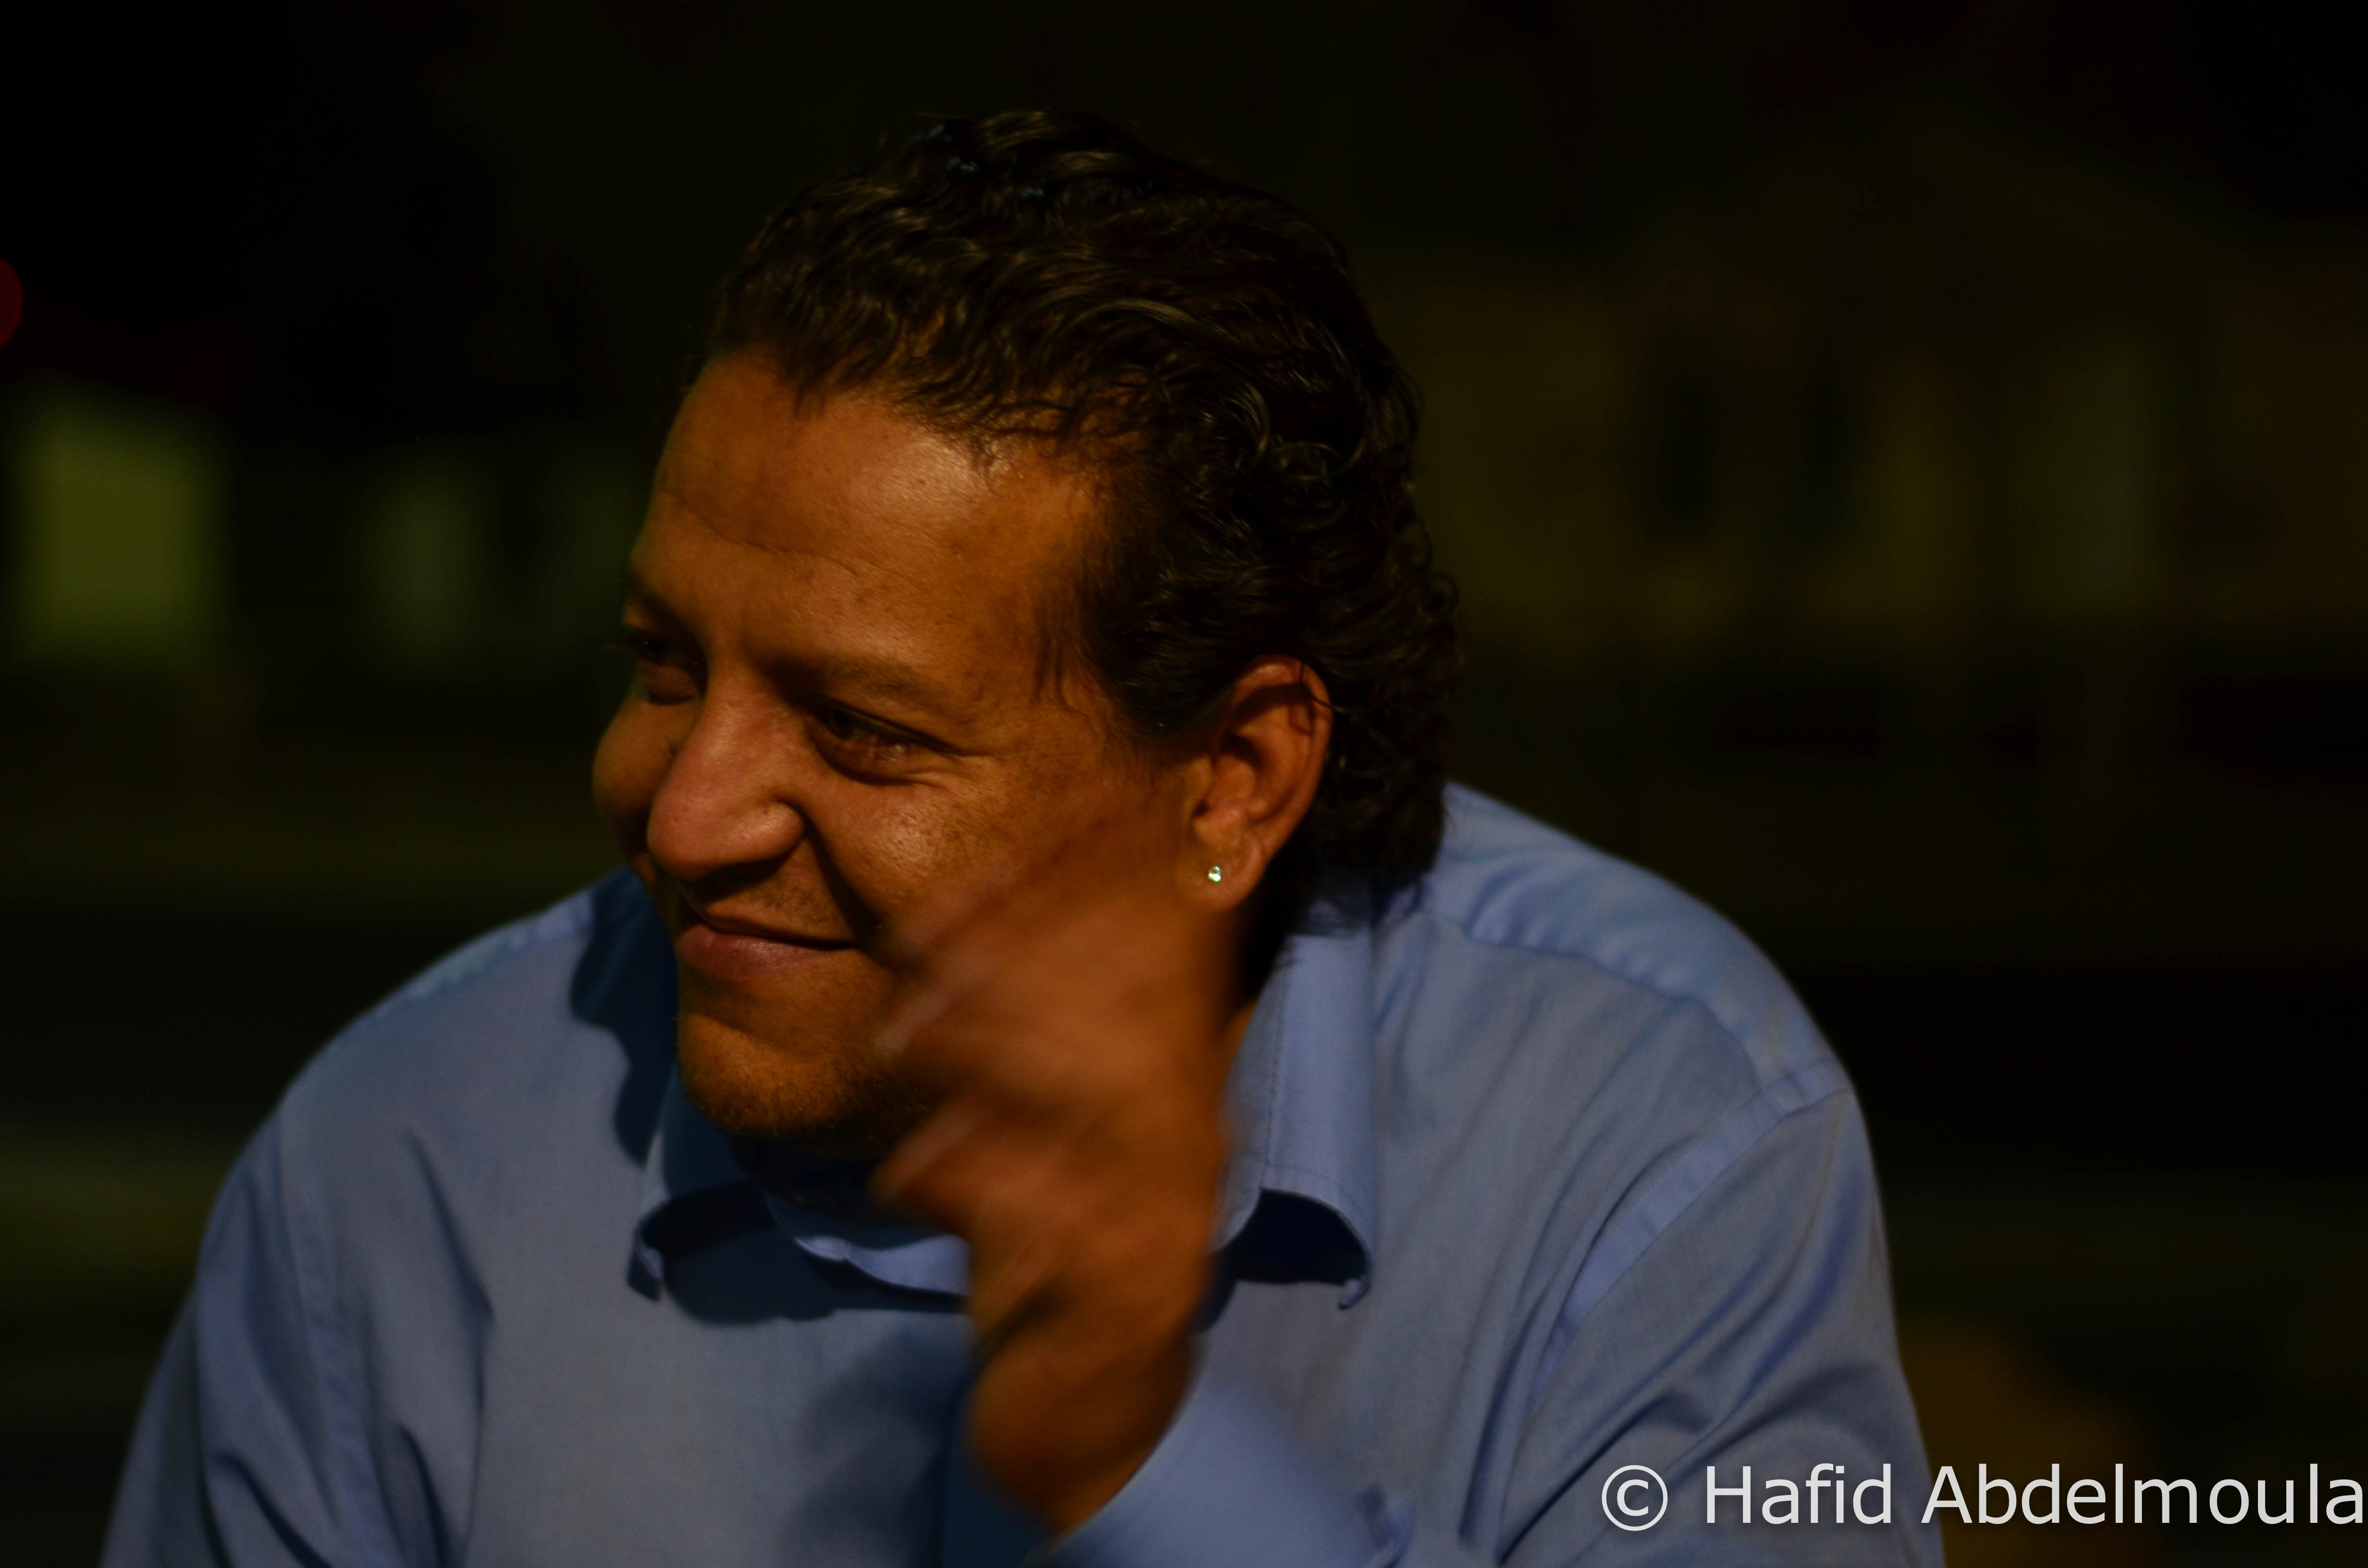 Hafid Abdelmoula